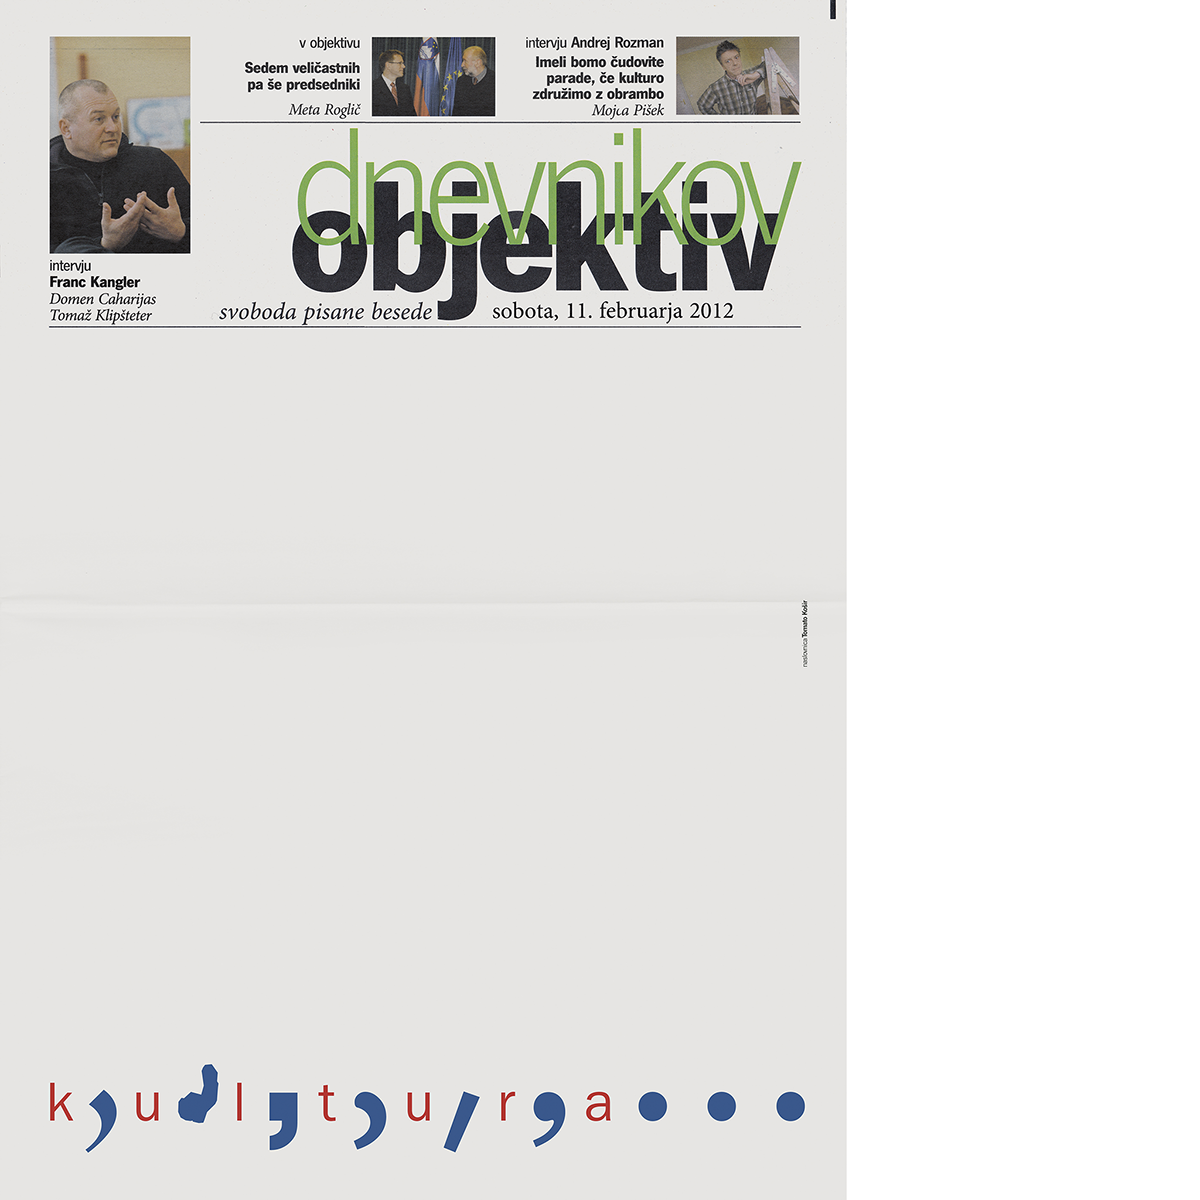 newspaper cover illustrations political slovenia tomato košir samo ačko Photo Manipulation  typographical Minimalism vector photo illustration  Art Directors Club ADC ADC New York